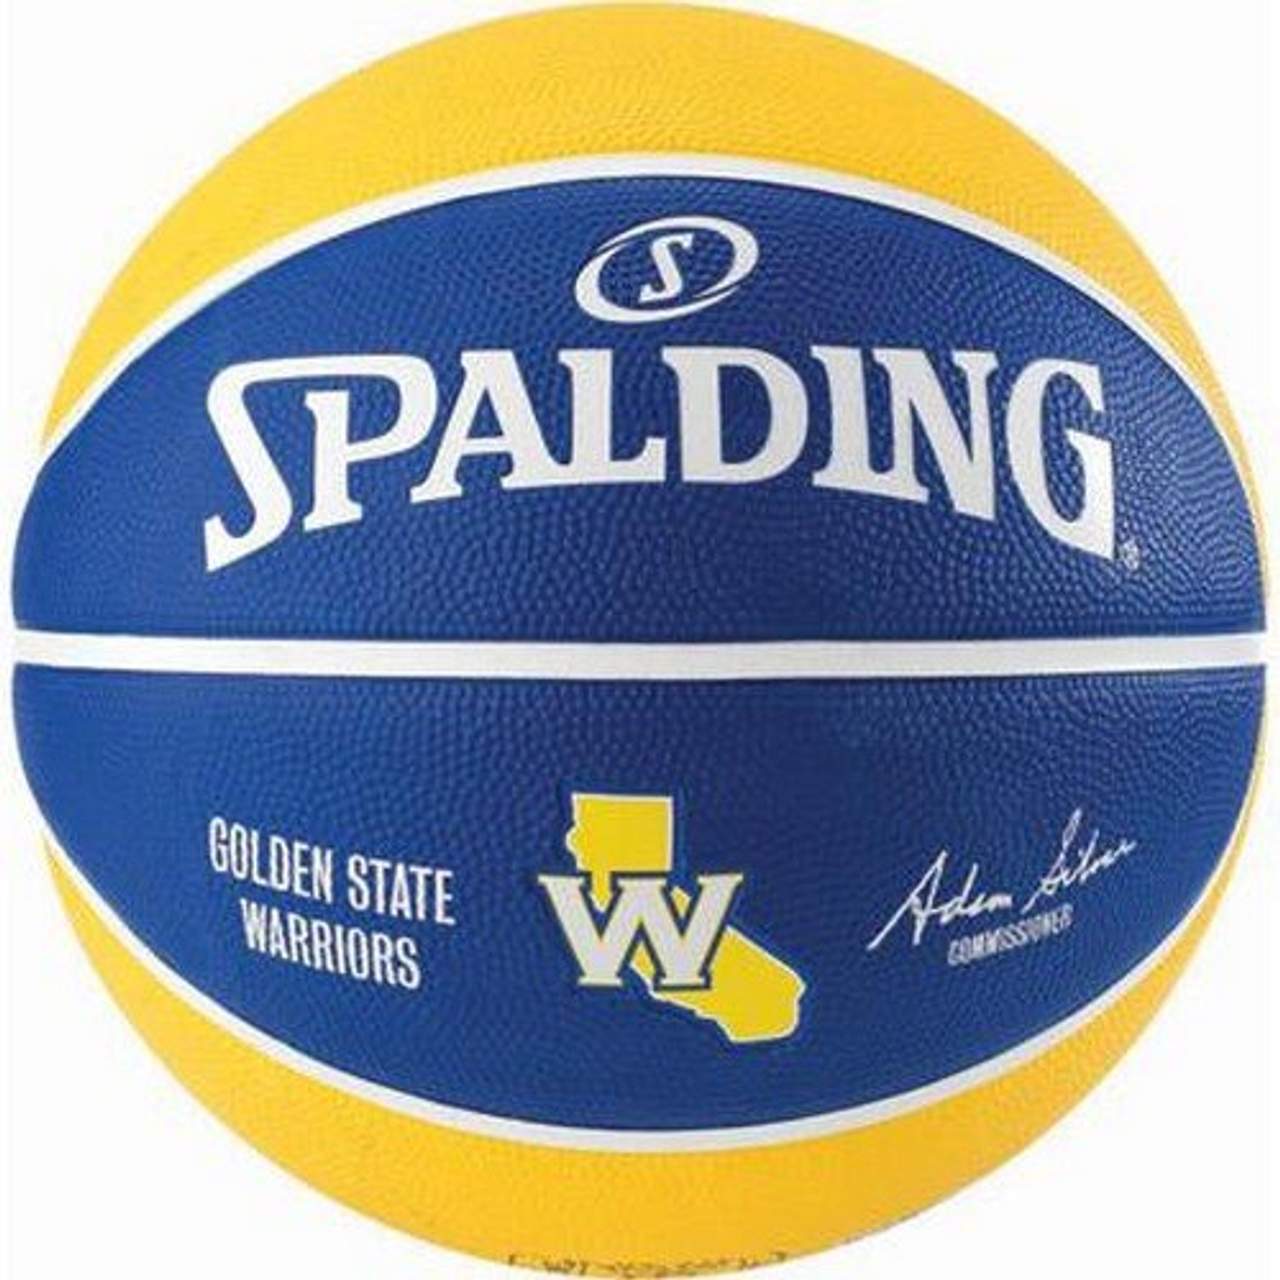 Spalding Unisex-Adult 3001587013817_7 Basketball